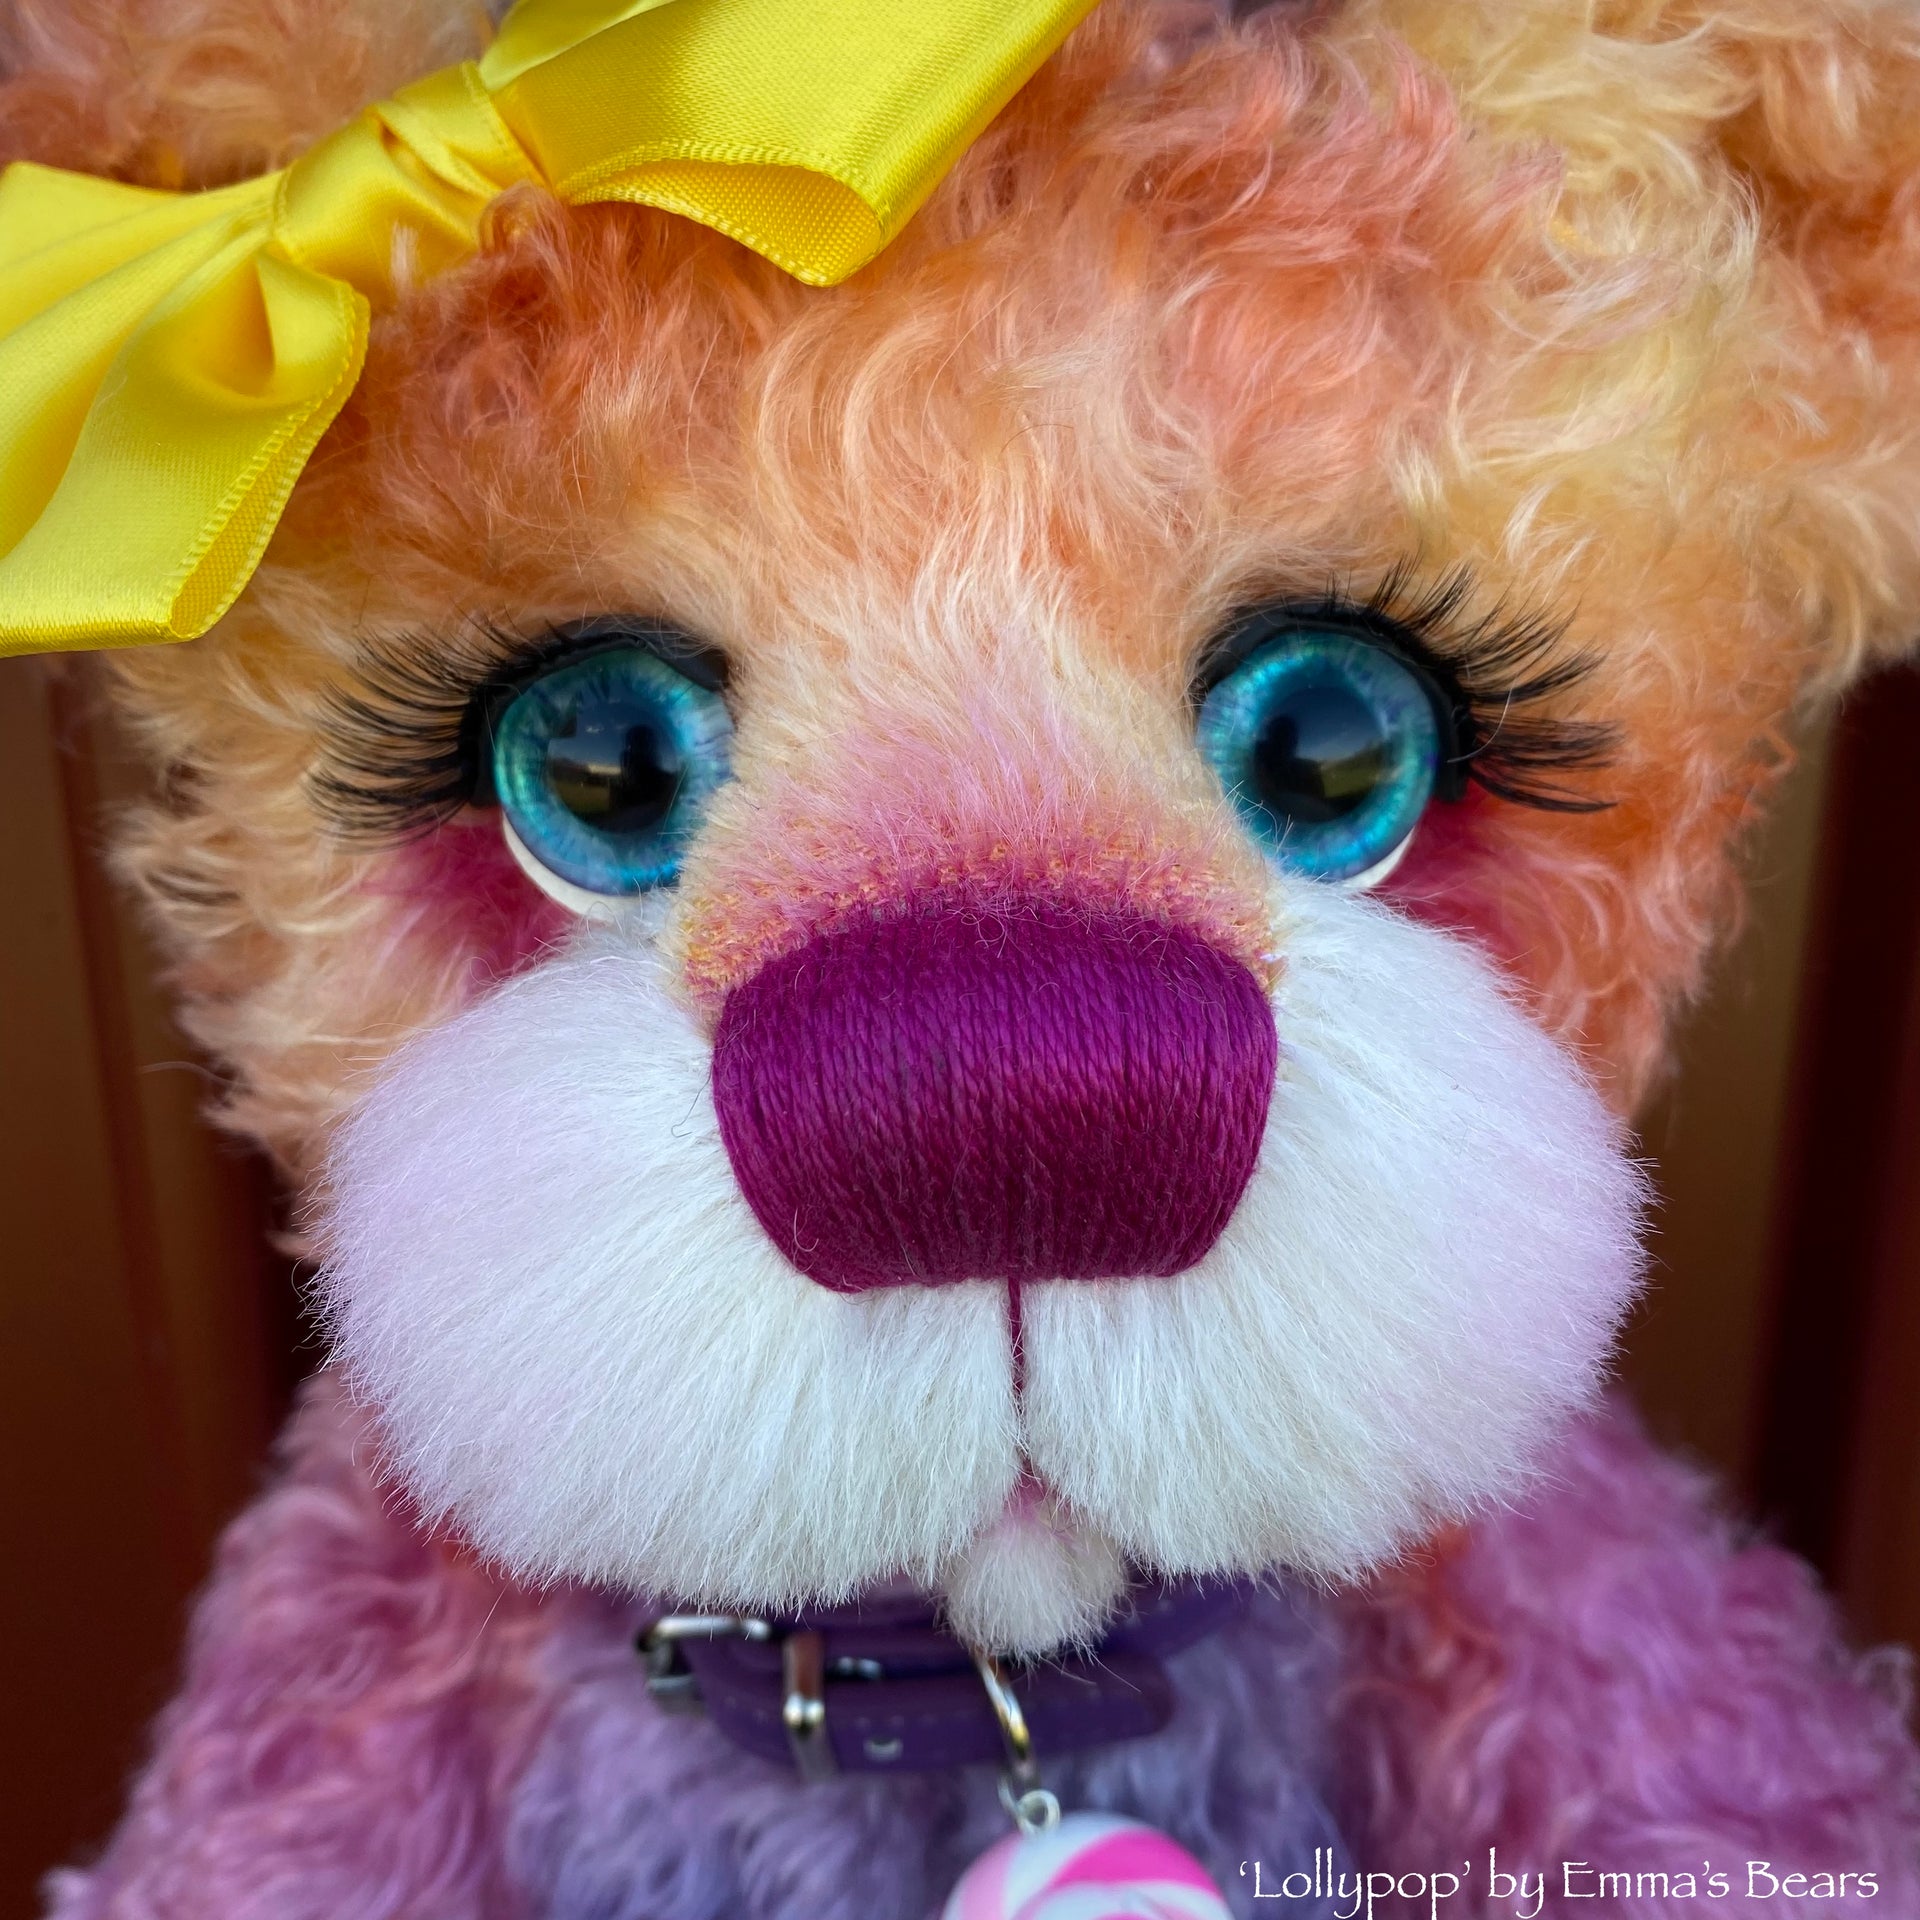 Lollypop - 16" Hand-dyed curly kid mohair Artist Bear by Emmas Bears - OOAK